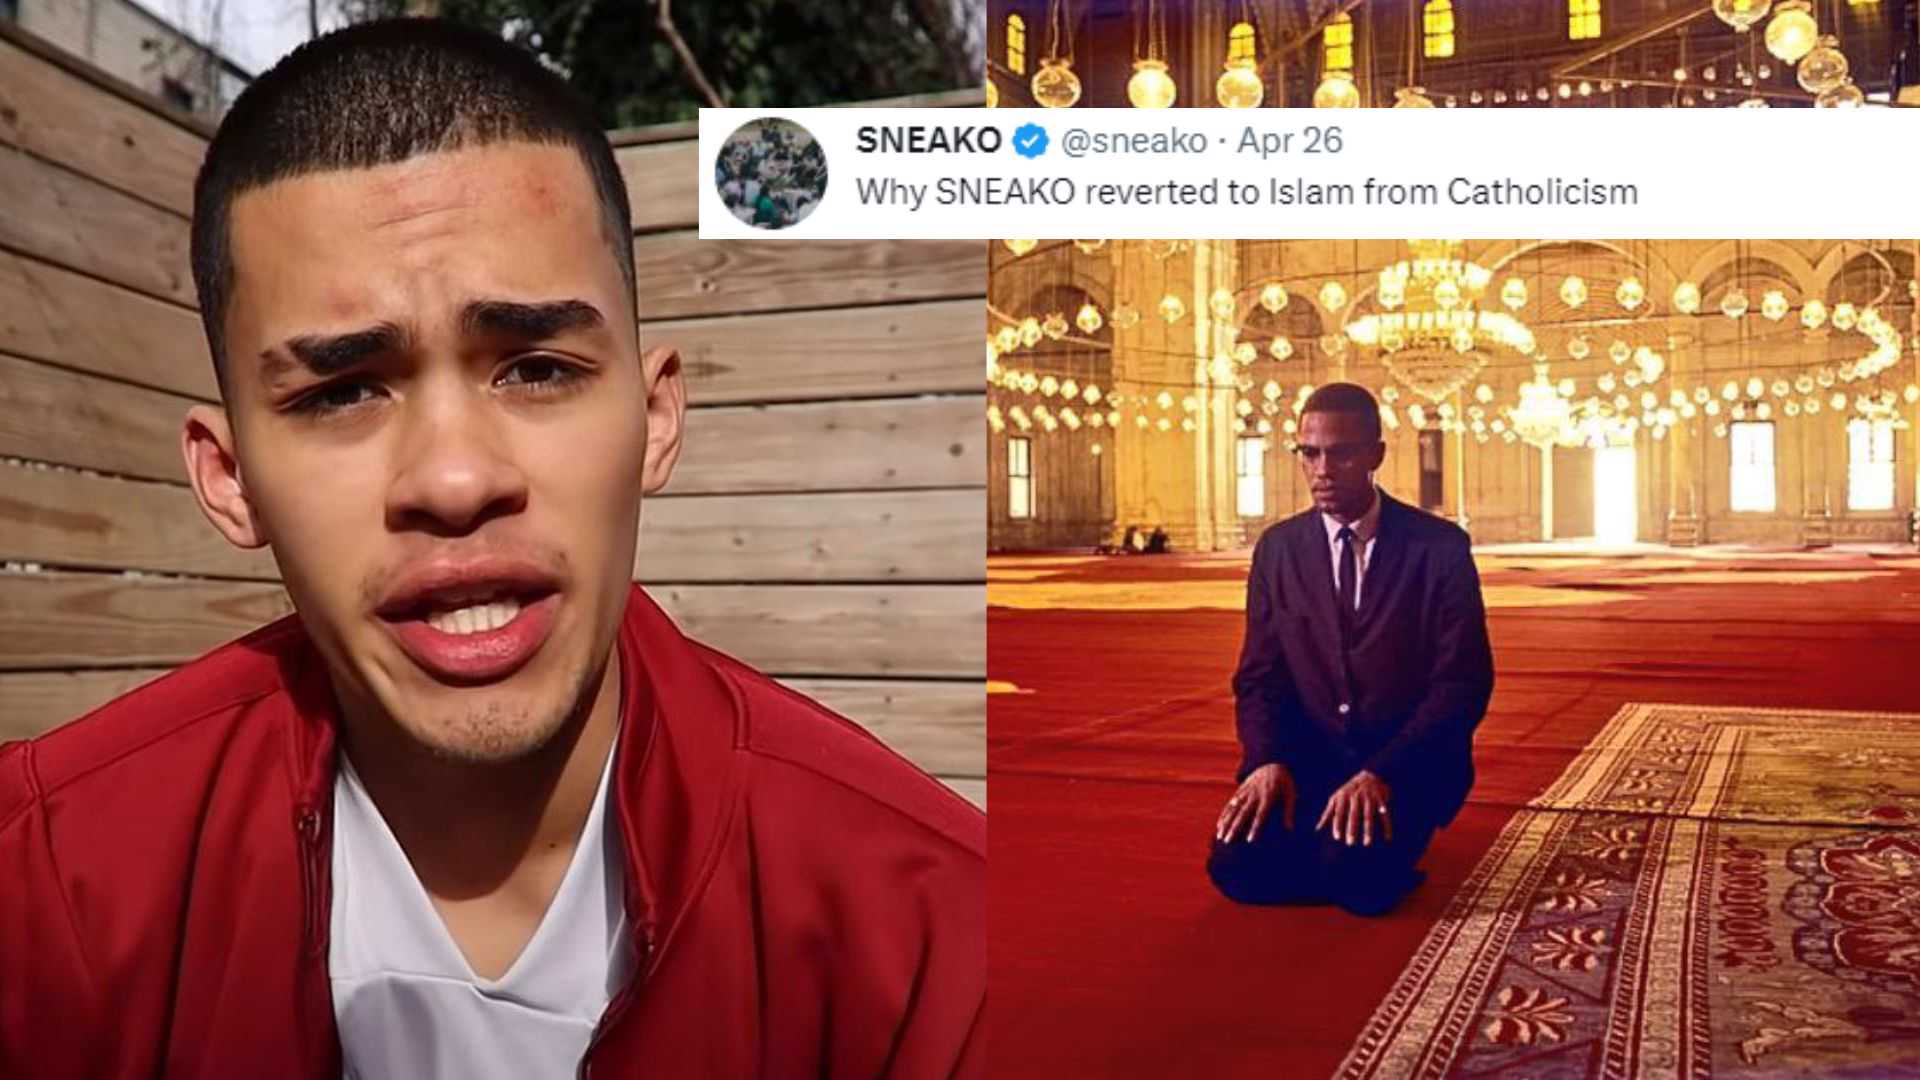 sneako converted to islam